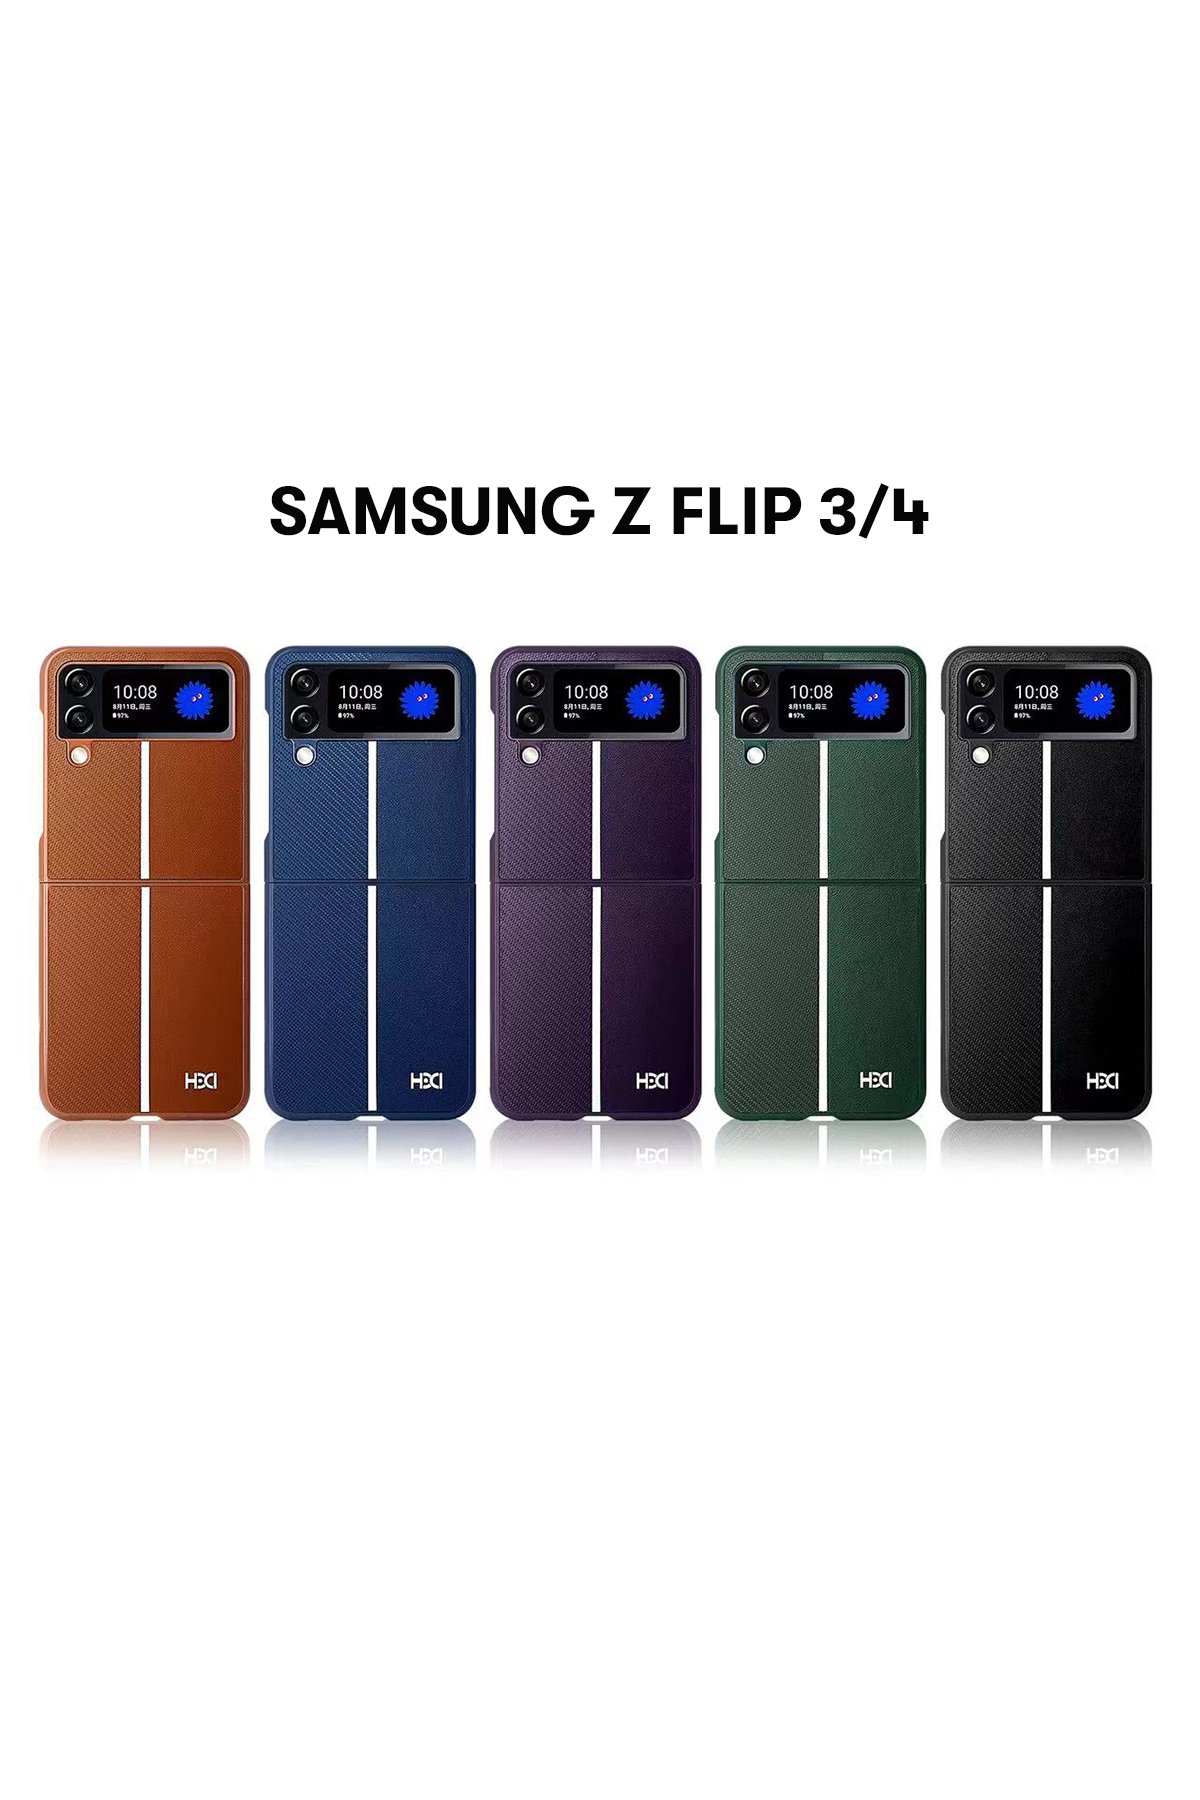 HDD Samsung Galaxy Z Flip 4 Kılıf HBC-156 Forum Magneticsafe Kapak - Koyu Yeşil